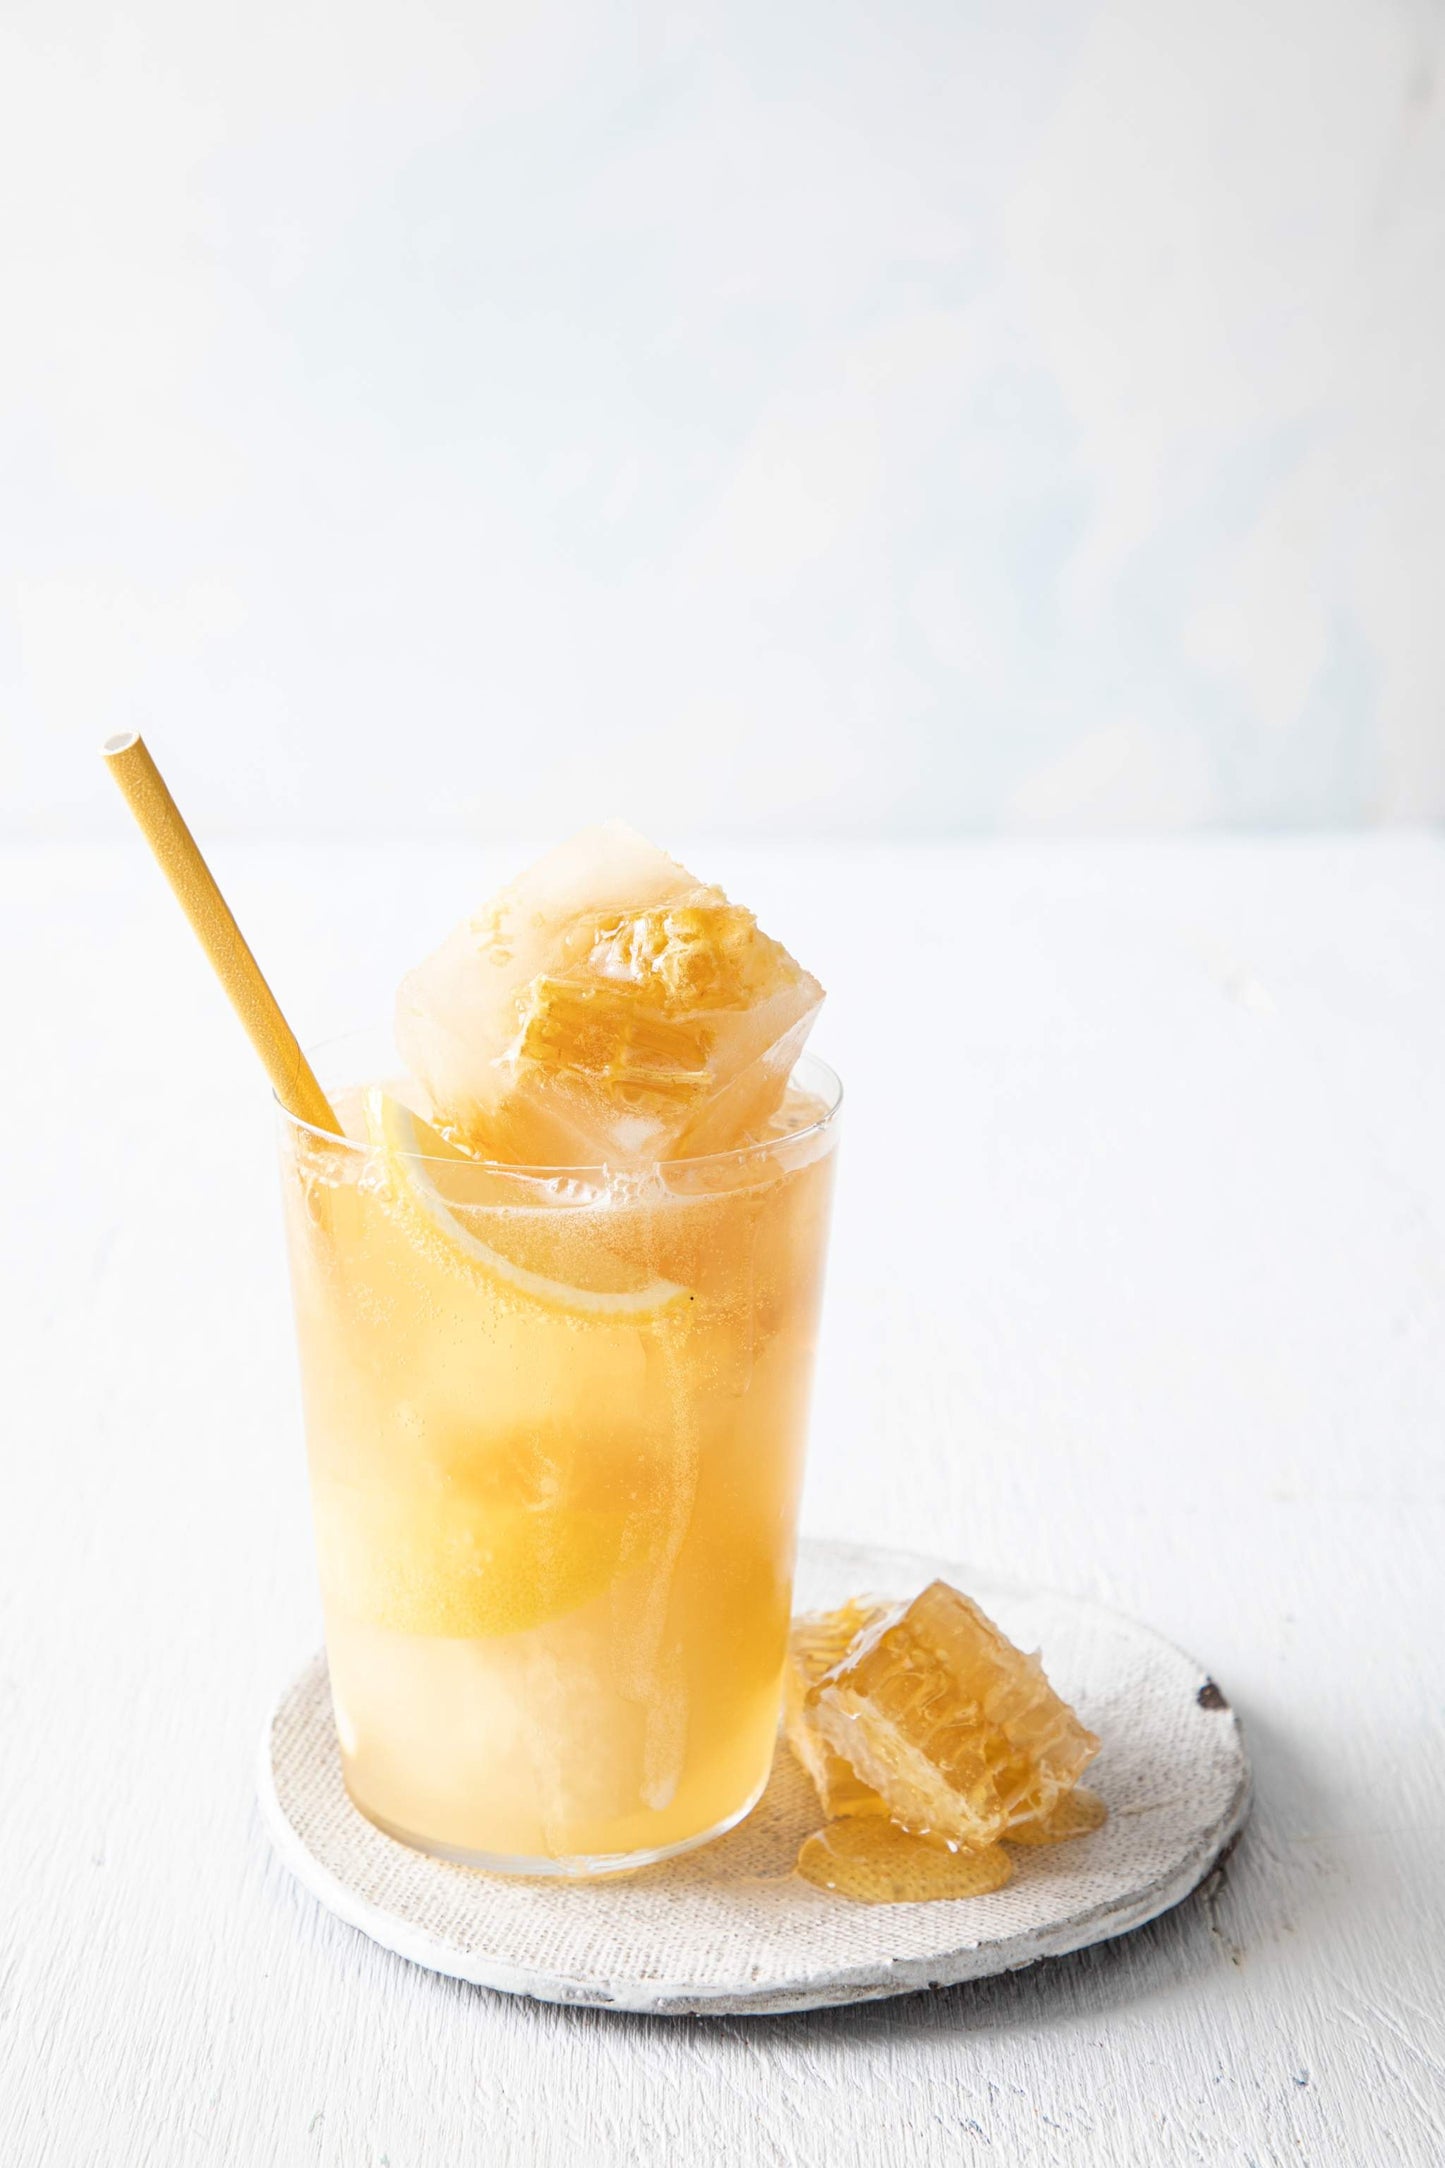 Fresh Honeycomb Lemonade with Acacia Honeycomb garnish.